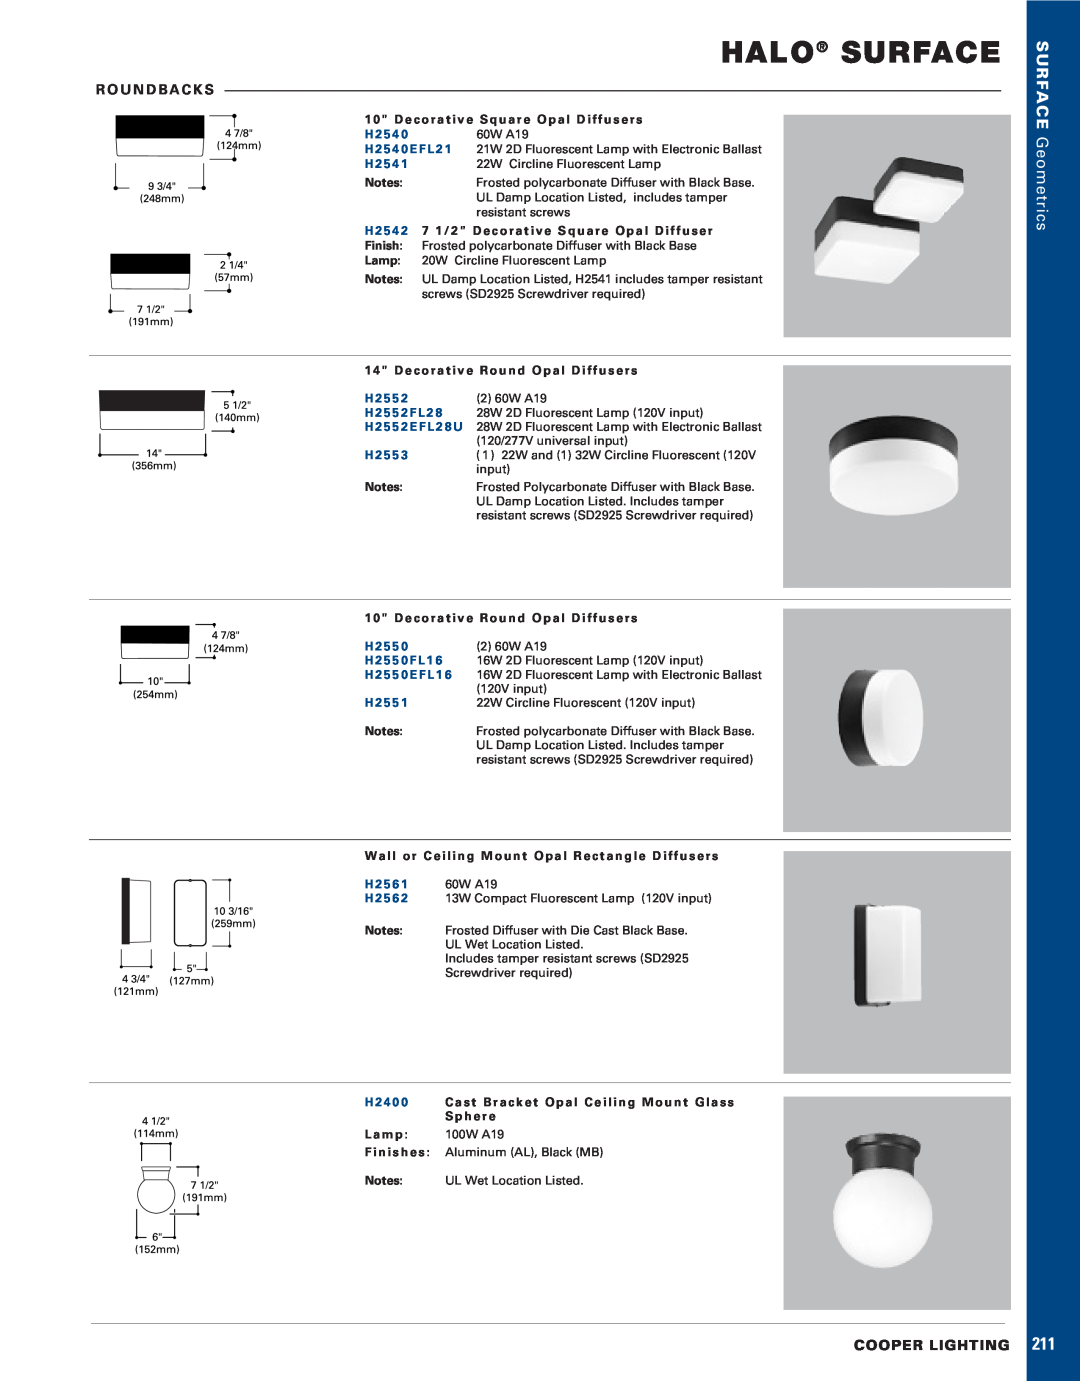 Halo Lighting System H2540 manual Halo Surface, SURFACE Geometrics, R O U N D B A C K S, Cooper Lighting 